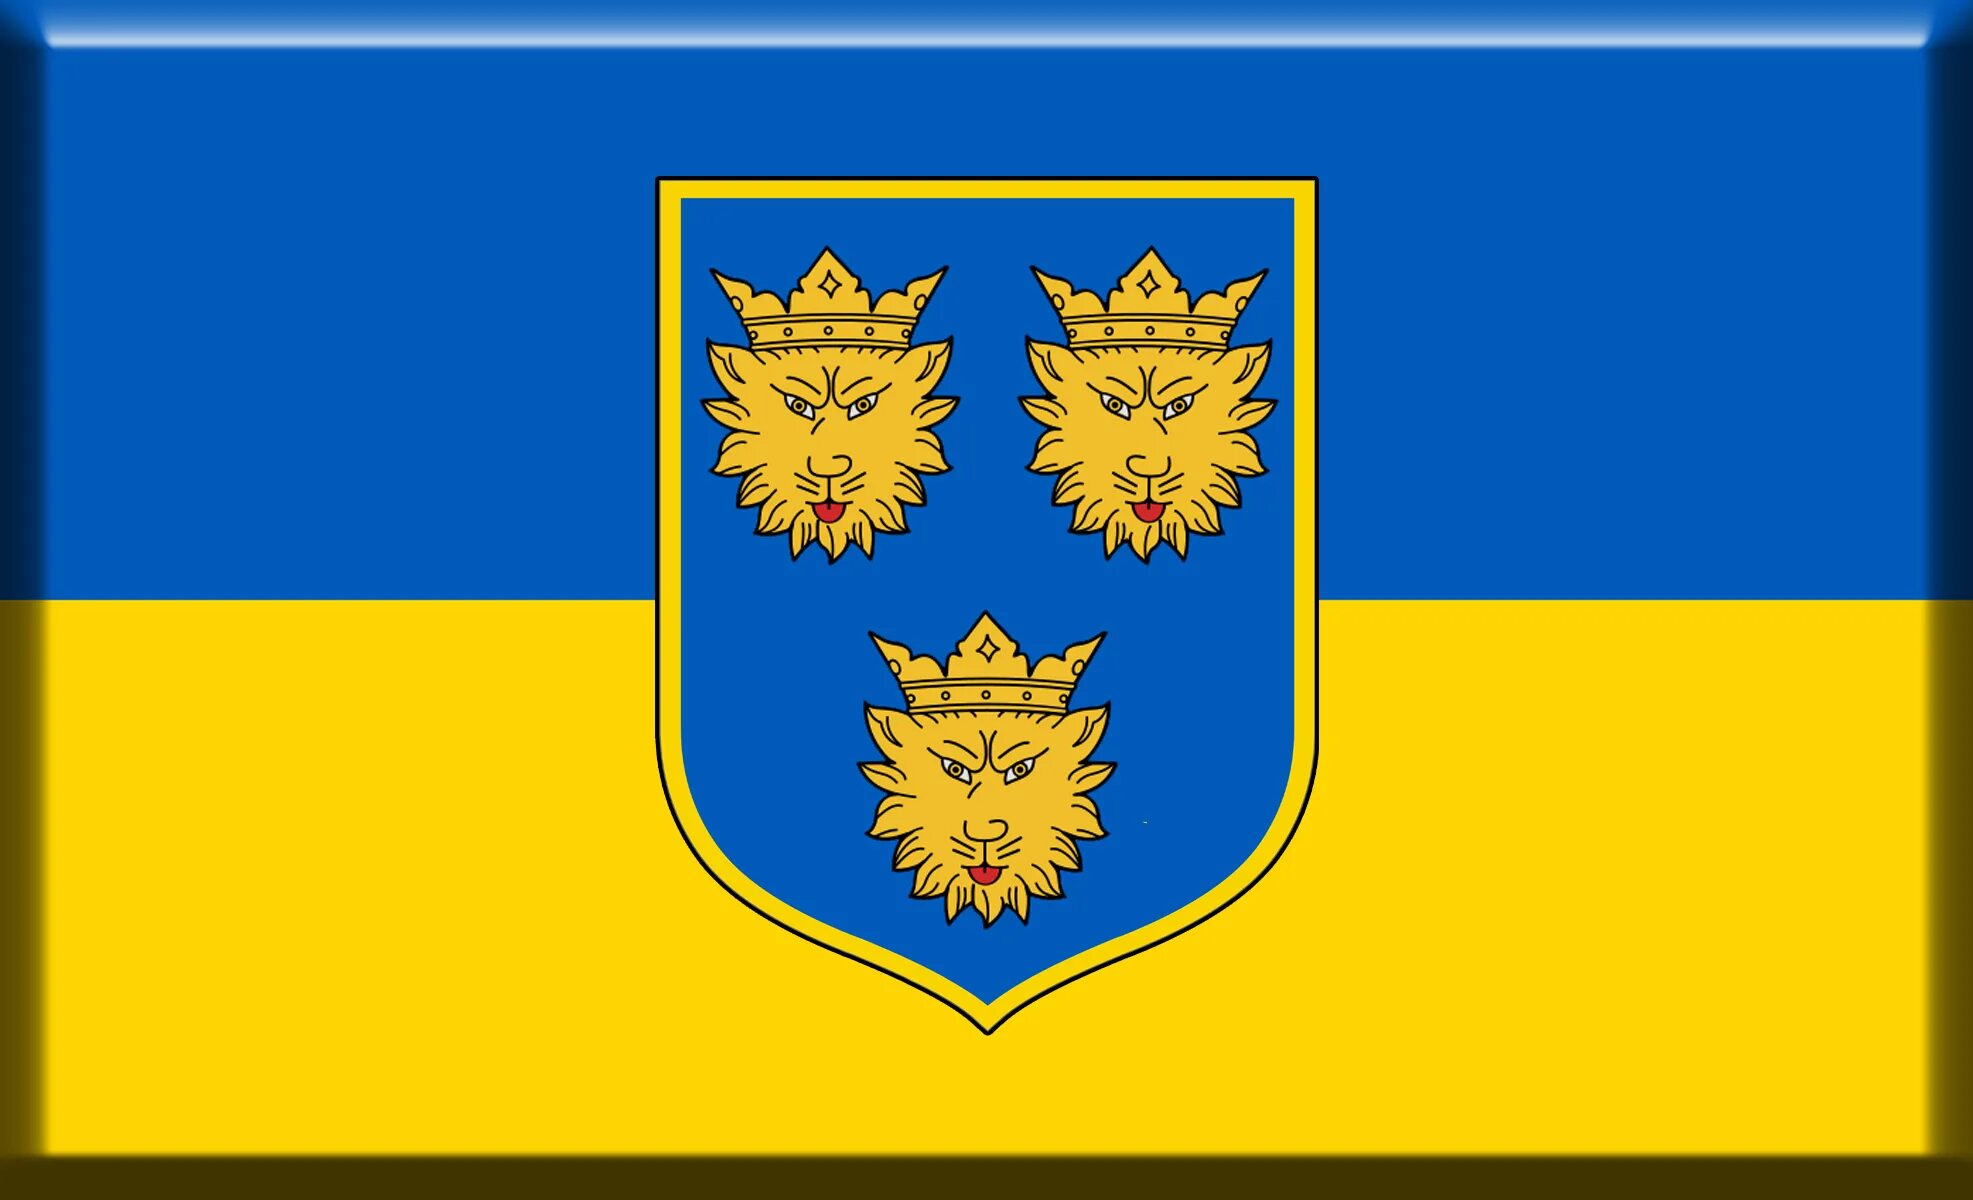 Сине желтый флаг украины. Королевство Далмация флаг. Герцогство Брауншвейг флаг Украины. Флаг Далмации и Украины. Флаг Далмации альтернативный.